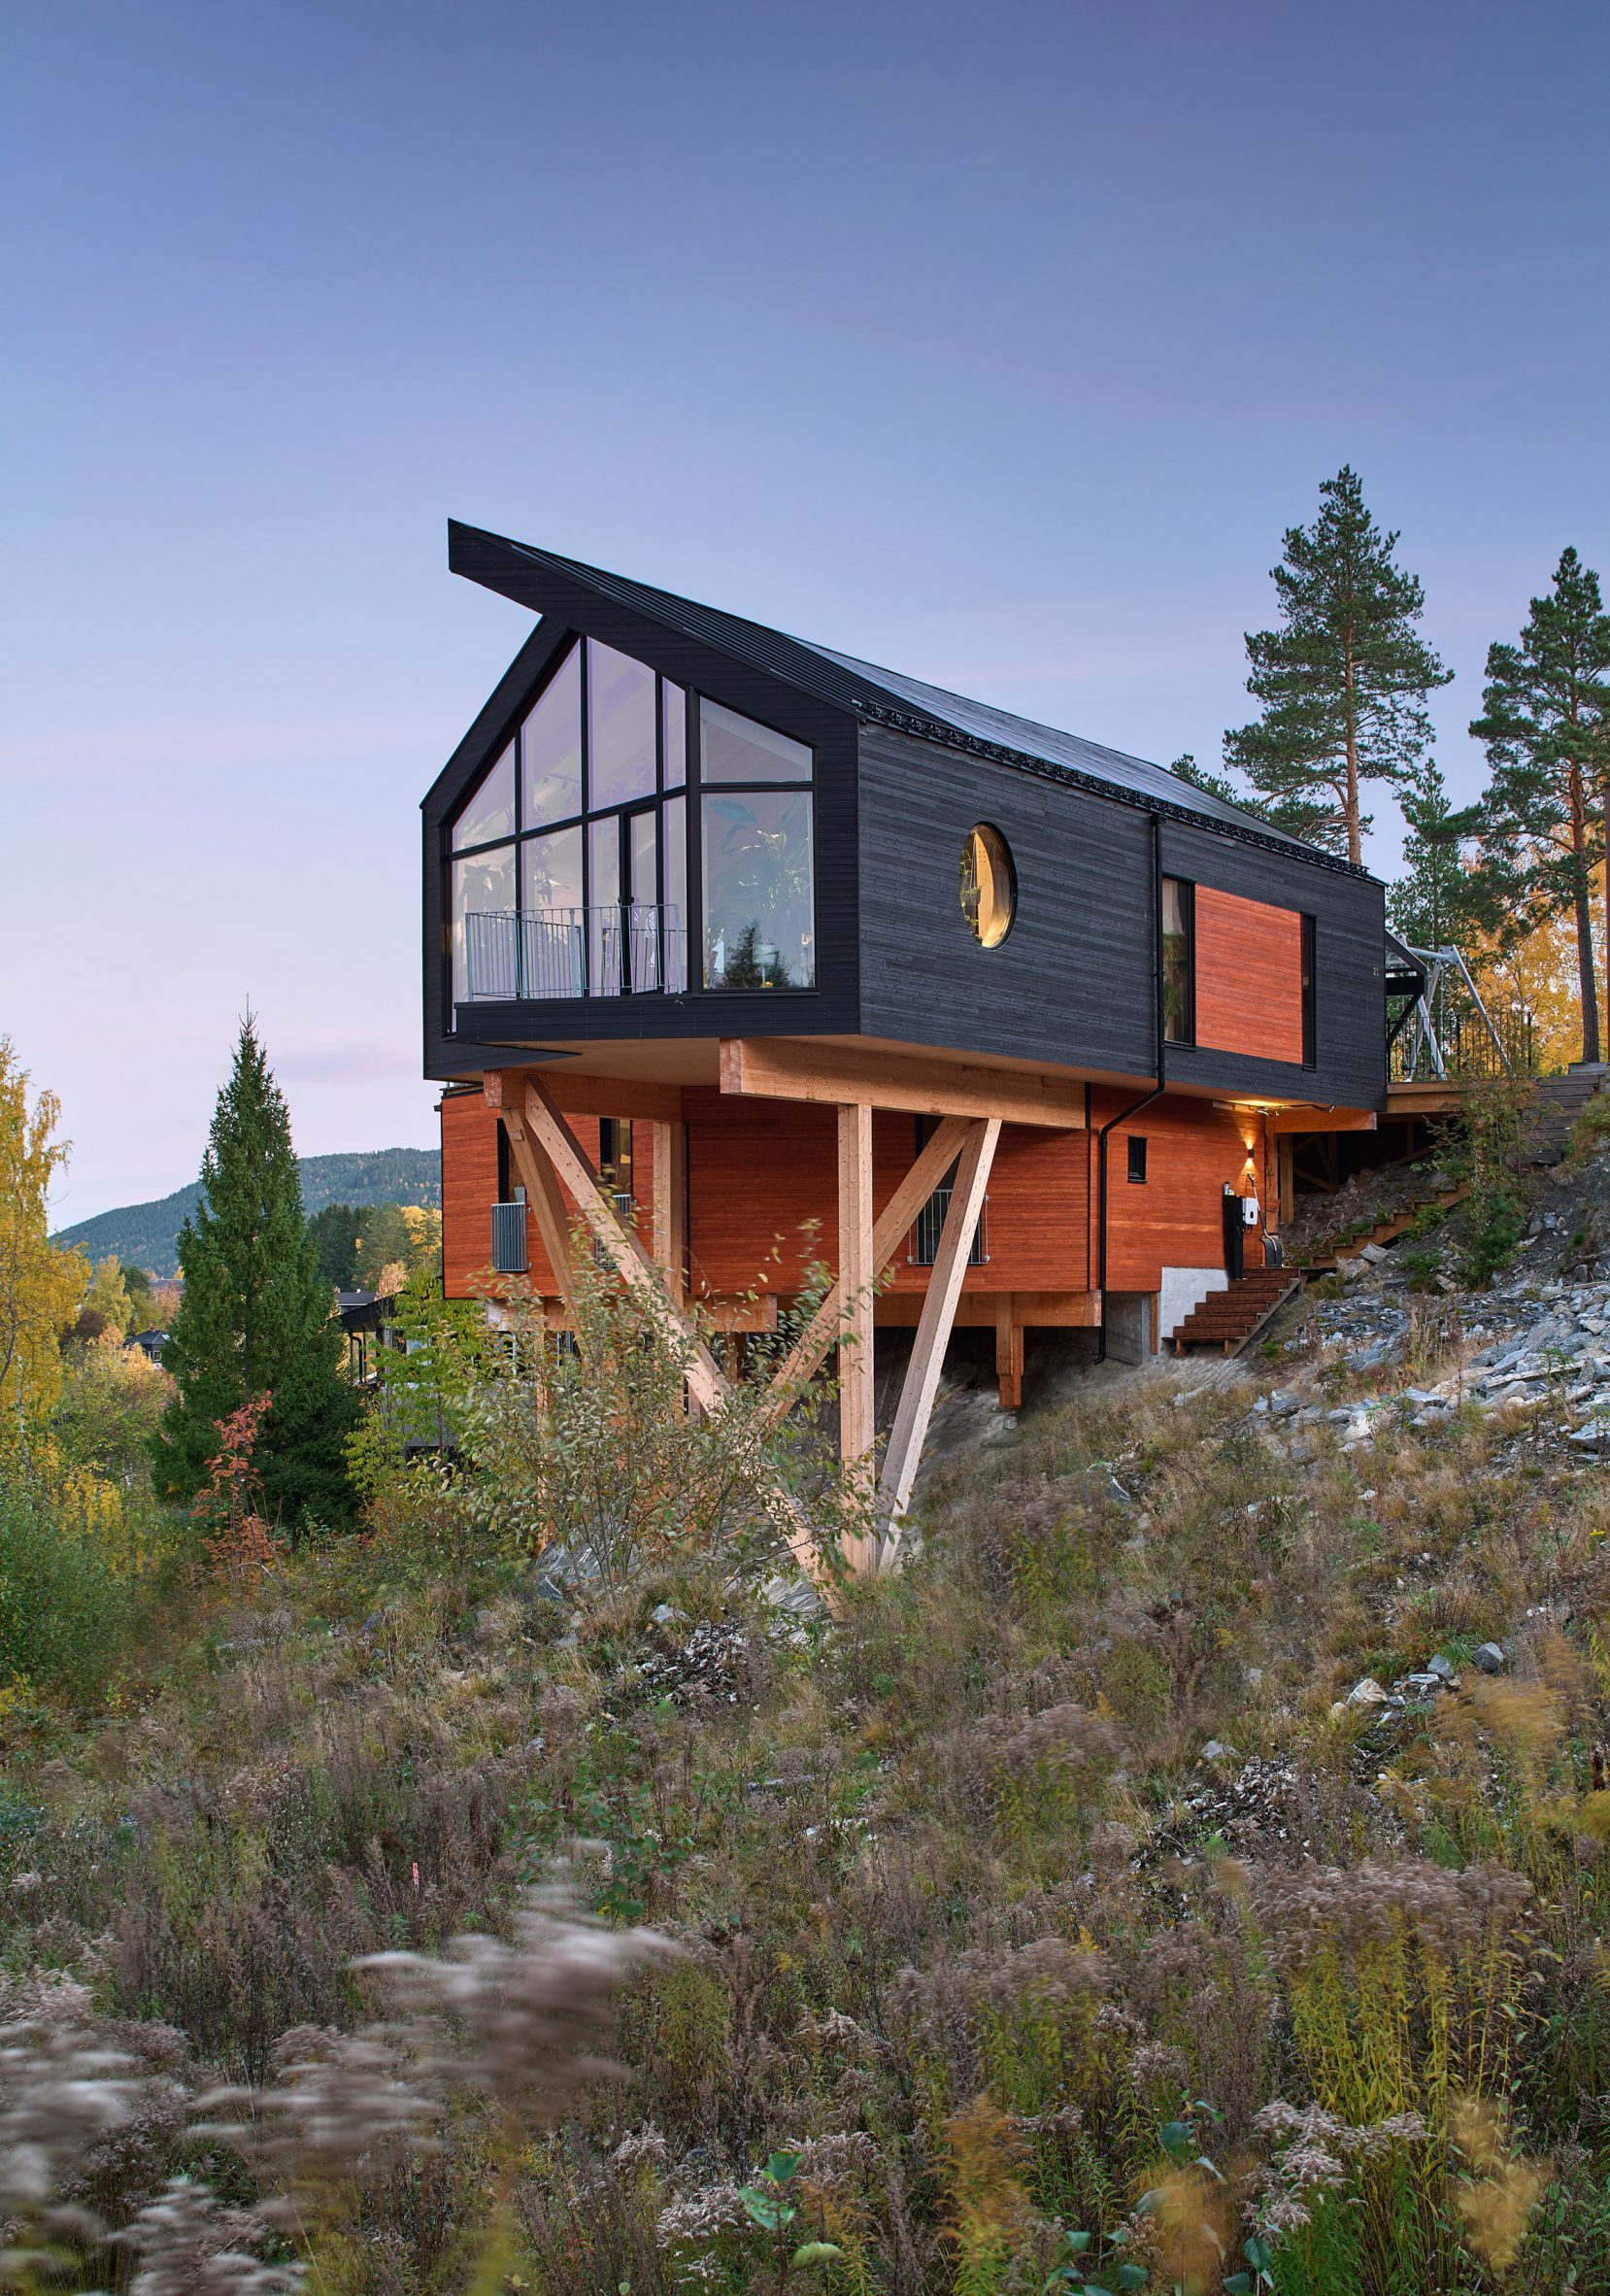 Snohetta and Tor Helge Dokka have created a Norwegian residence